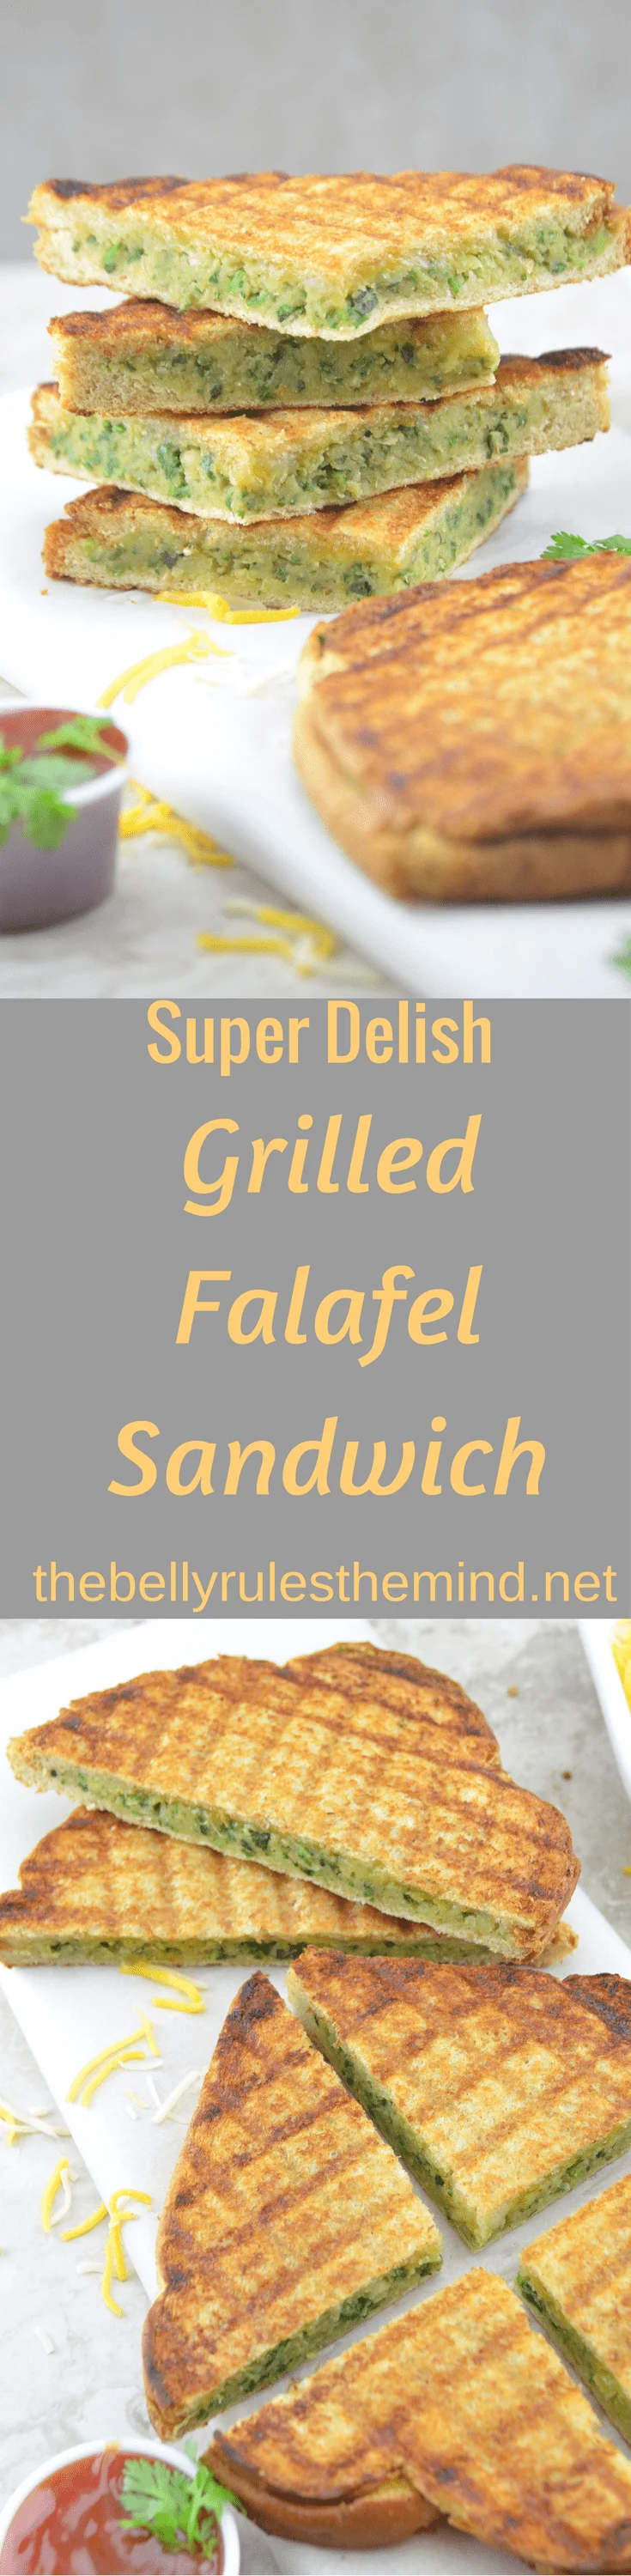 Grilled Falafel Sandwich